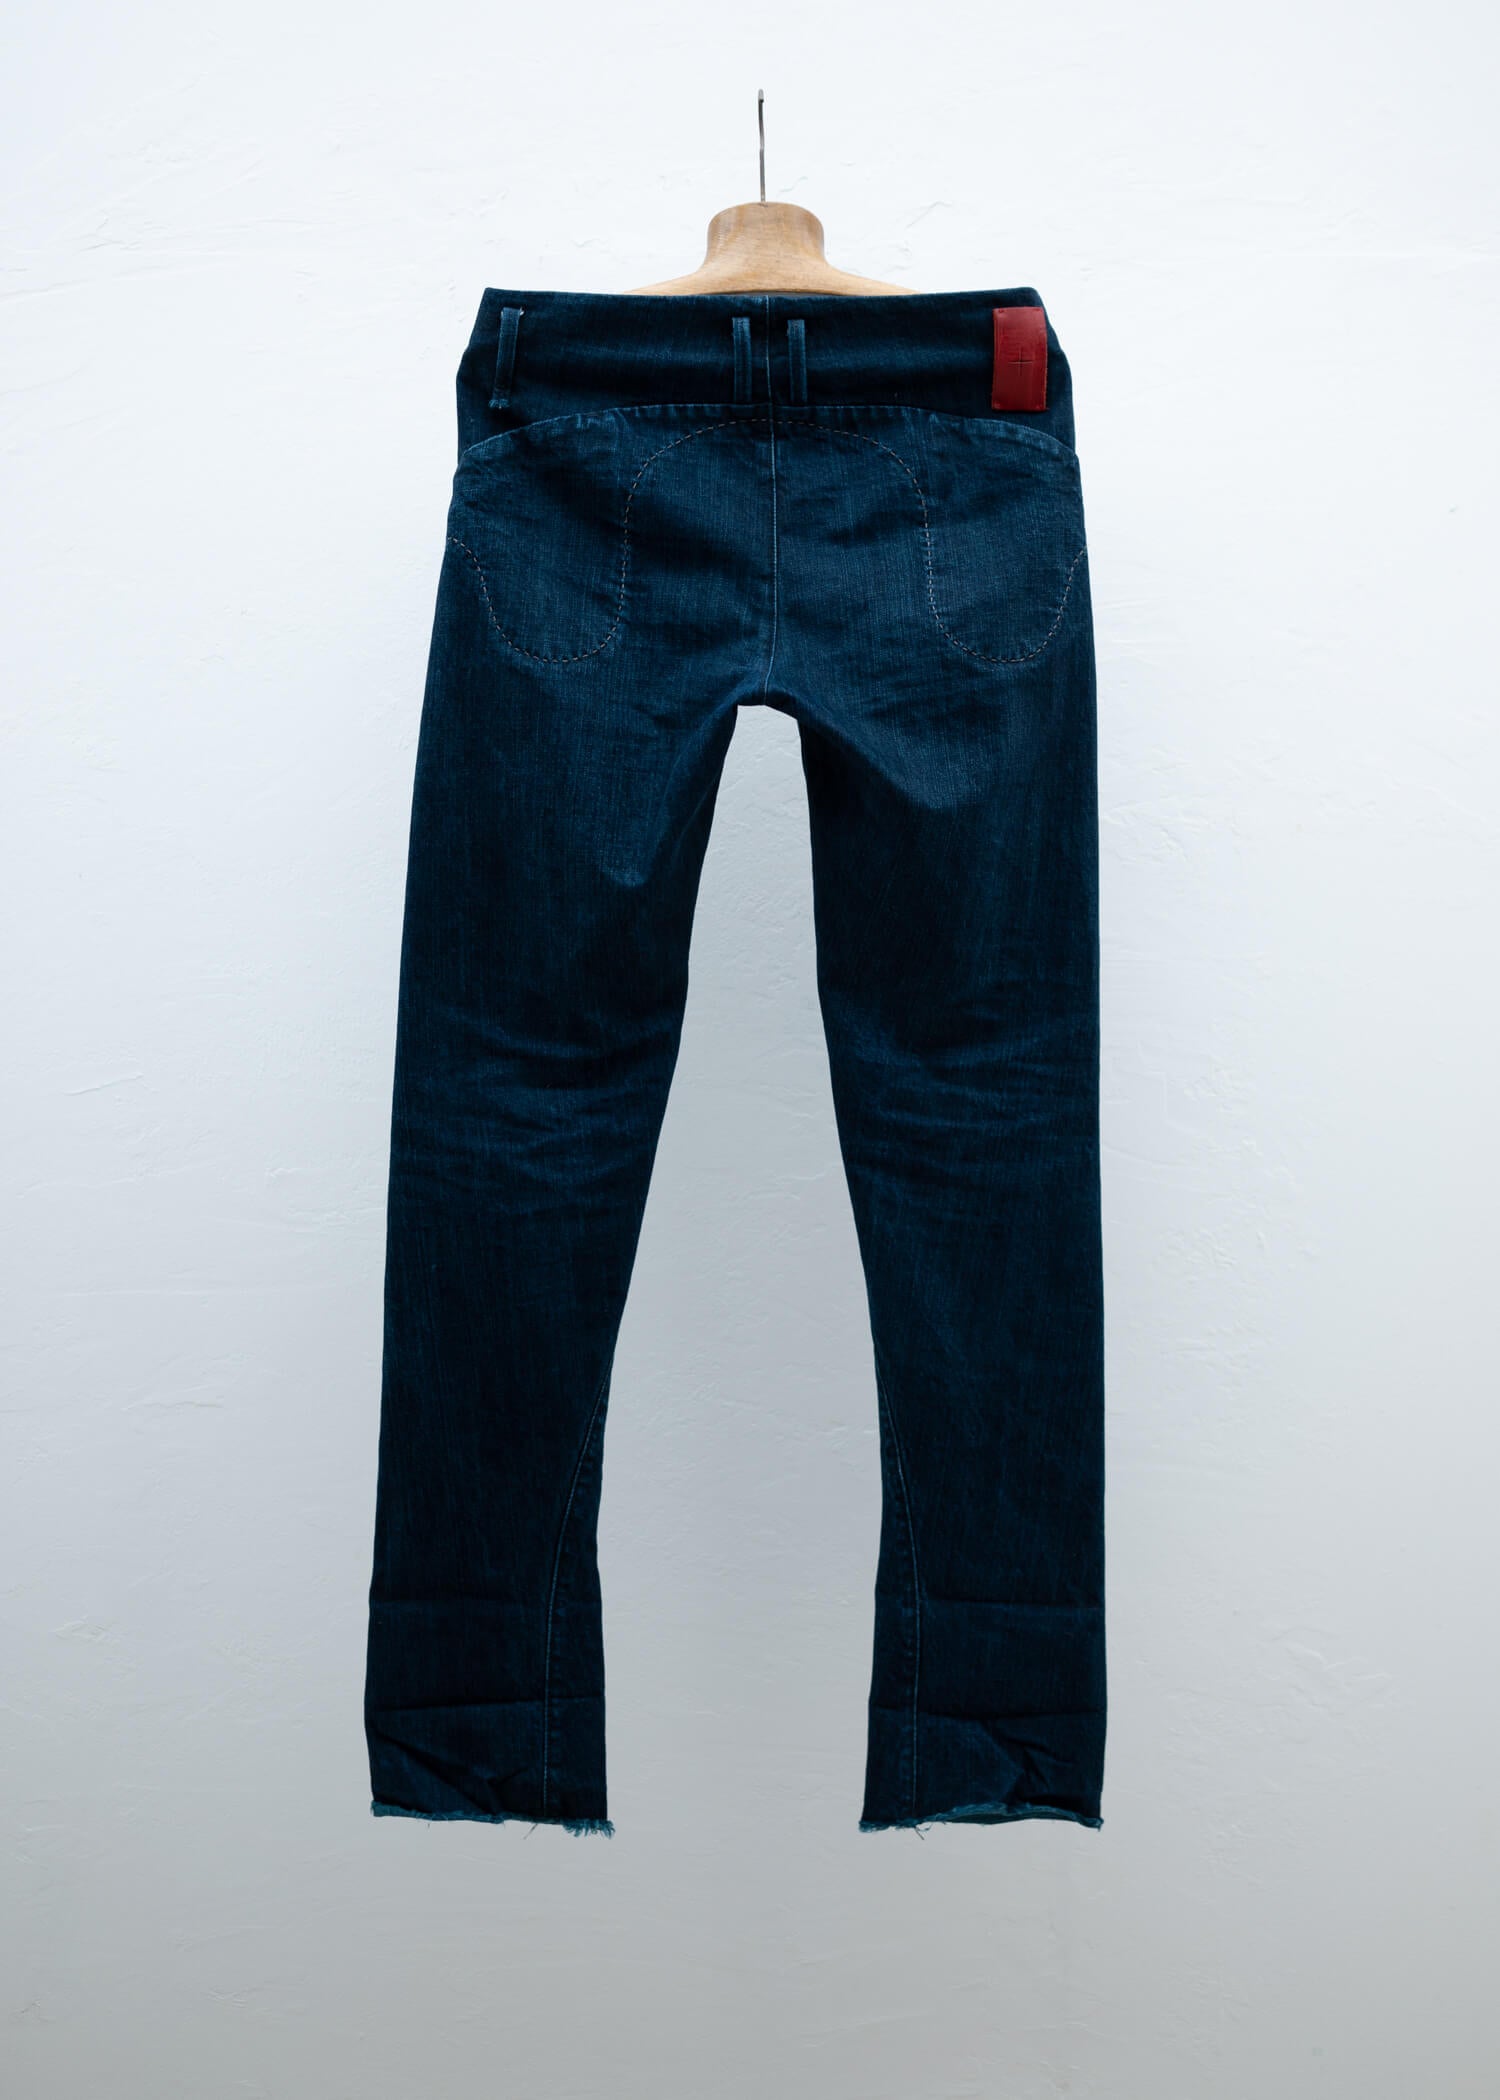 ma+ 19AW 0P01.10-CDI Denim Jeans デニムパンツ